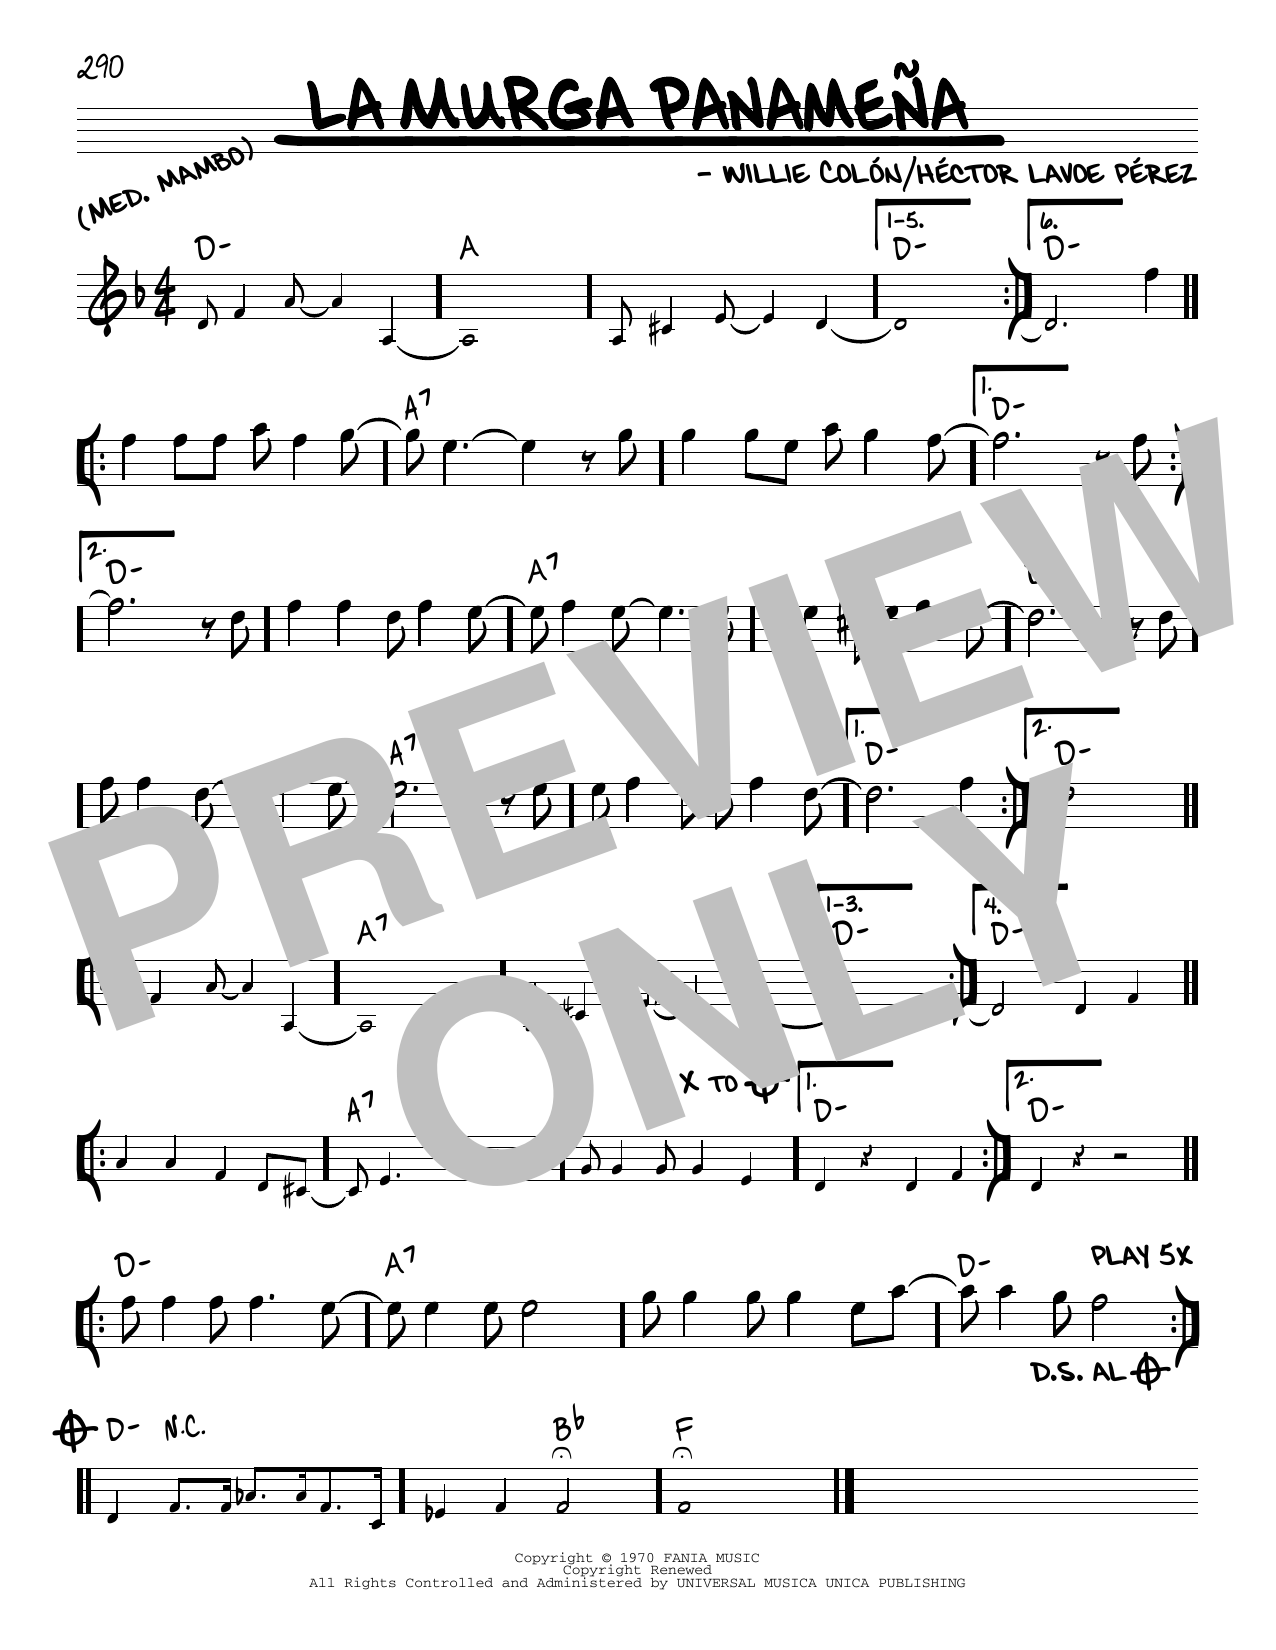 Willie Colon La Murga Panamena Sheet Music Notes & Chords for Real Book – Melody & Chords - Download or Print PDF